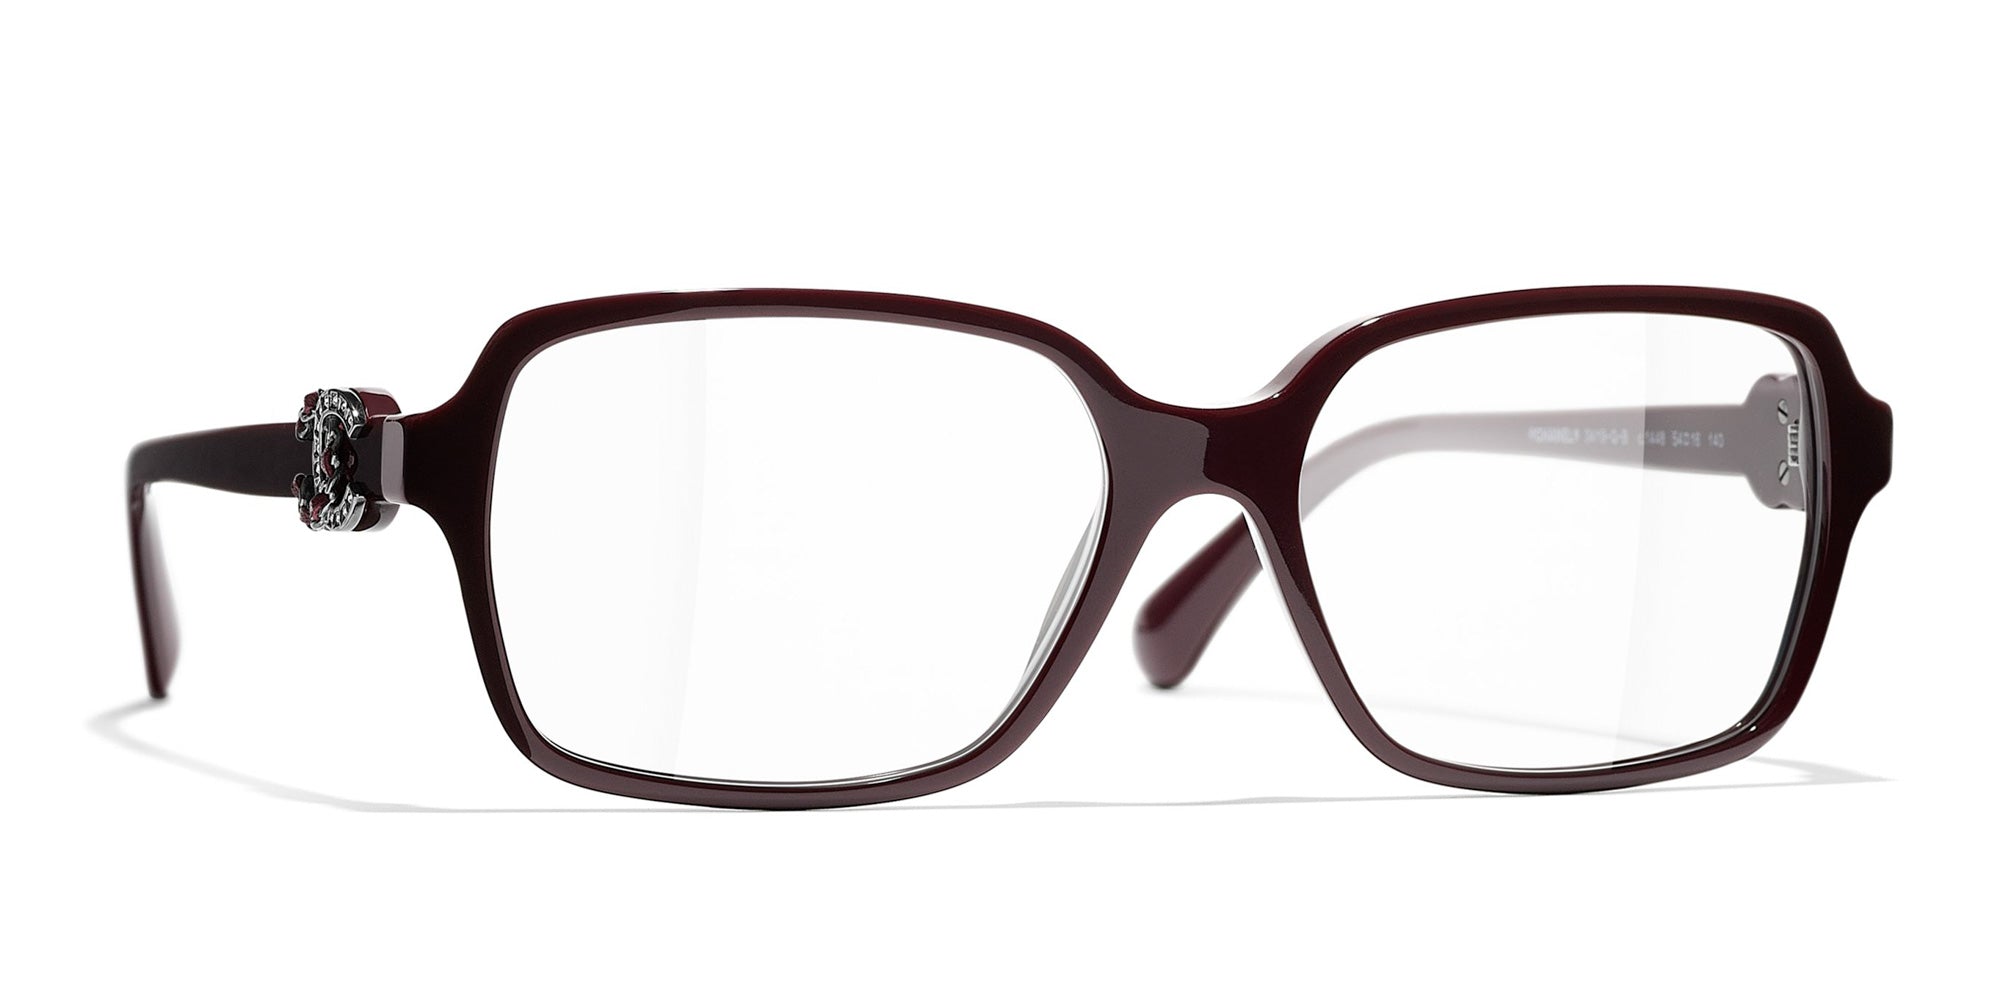 Get the best deals on CHANEL Women's Metal Eyeglass Frames when